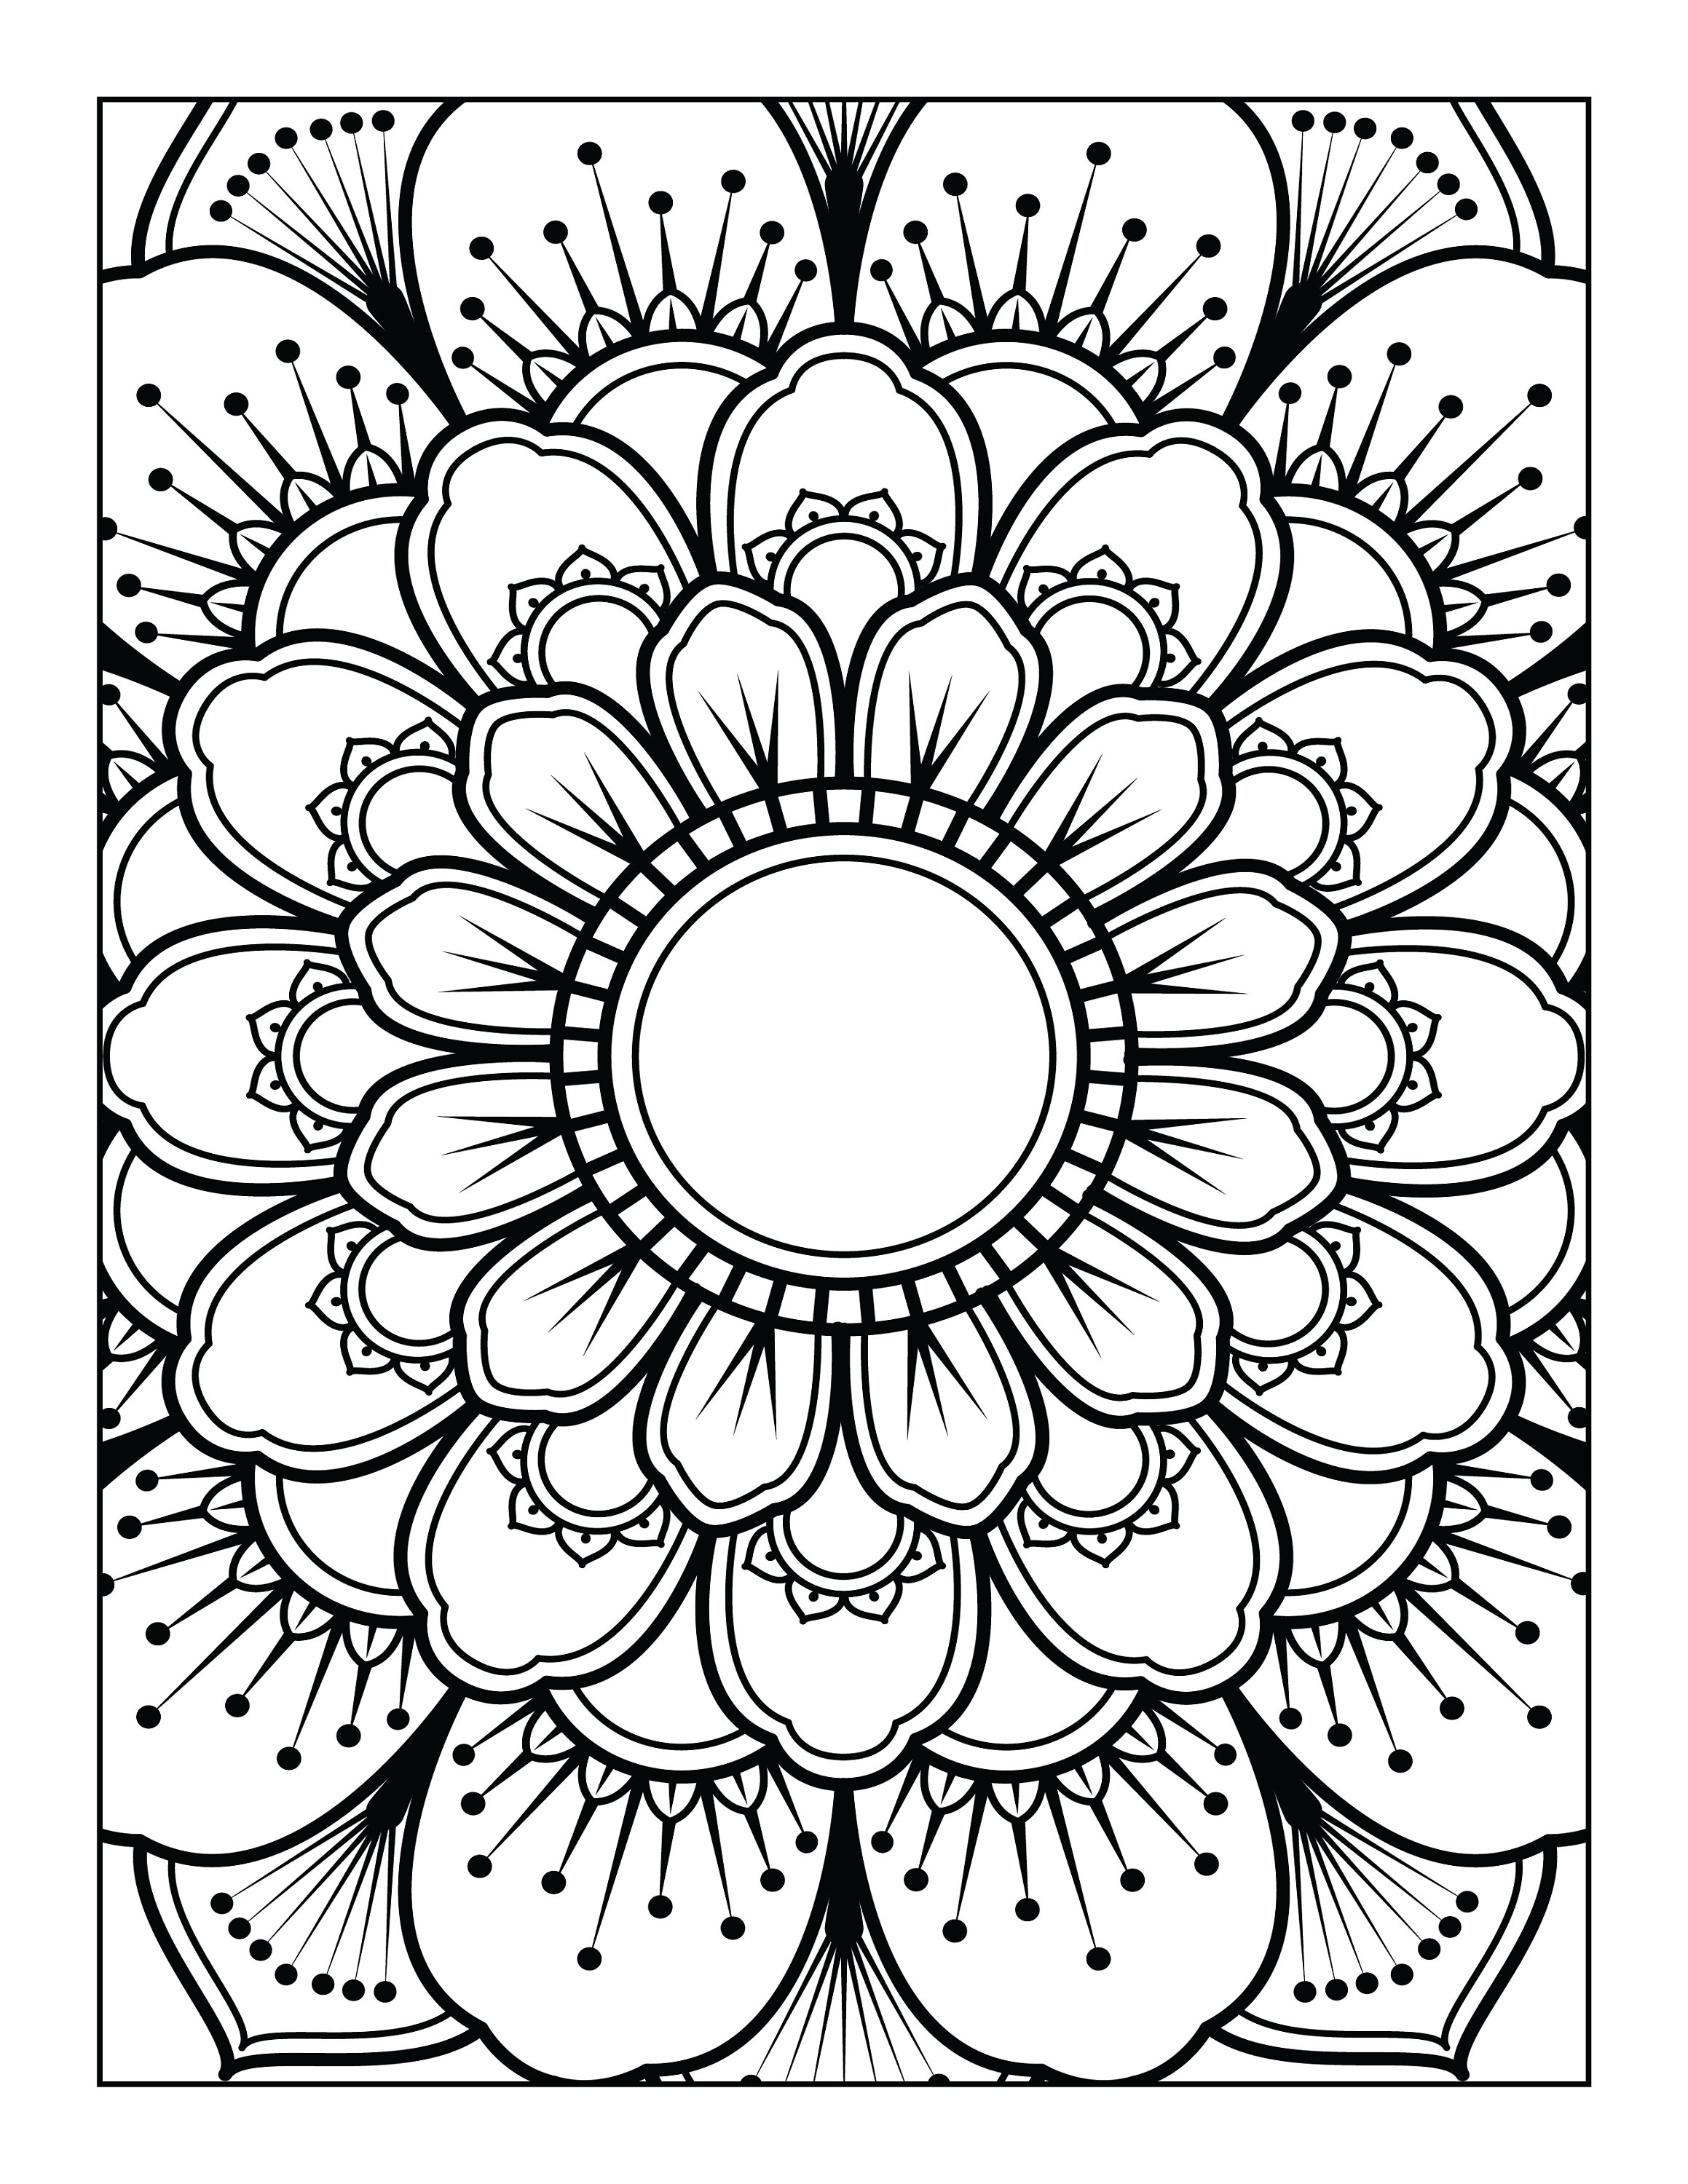 Printable mandala adult coloring pages floral easy coloring book mandalas